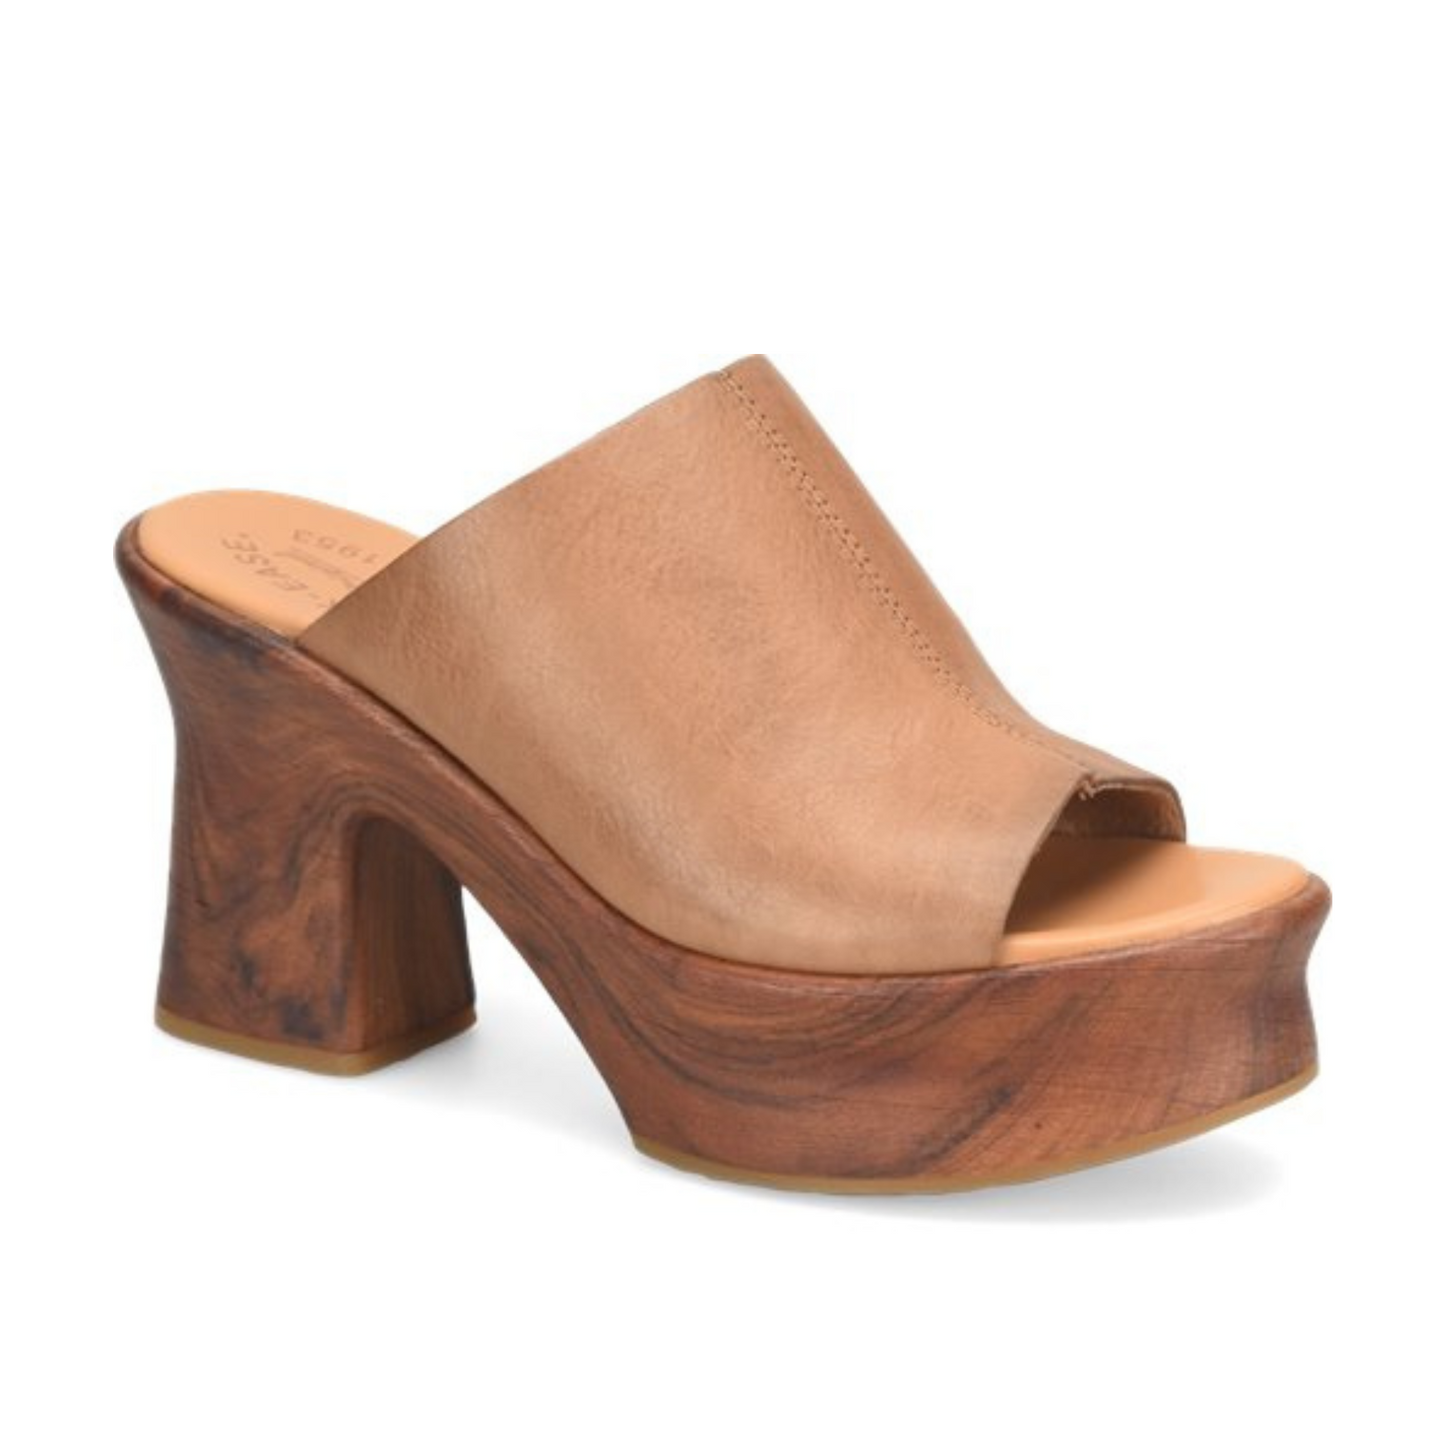 The brown leather Cassia Clog Platform Sandal by Kork-Ease